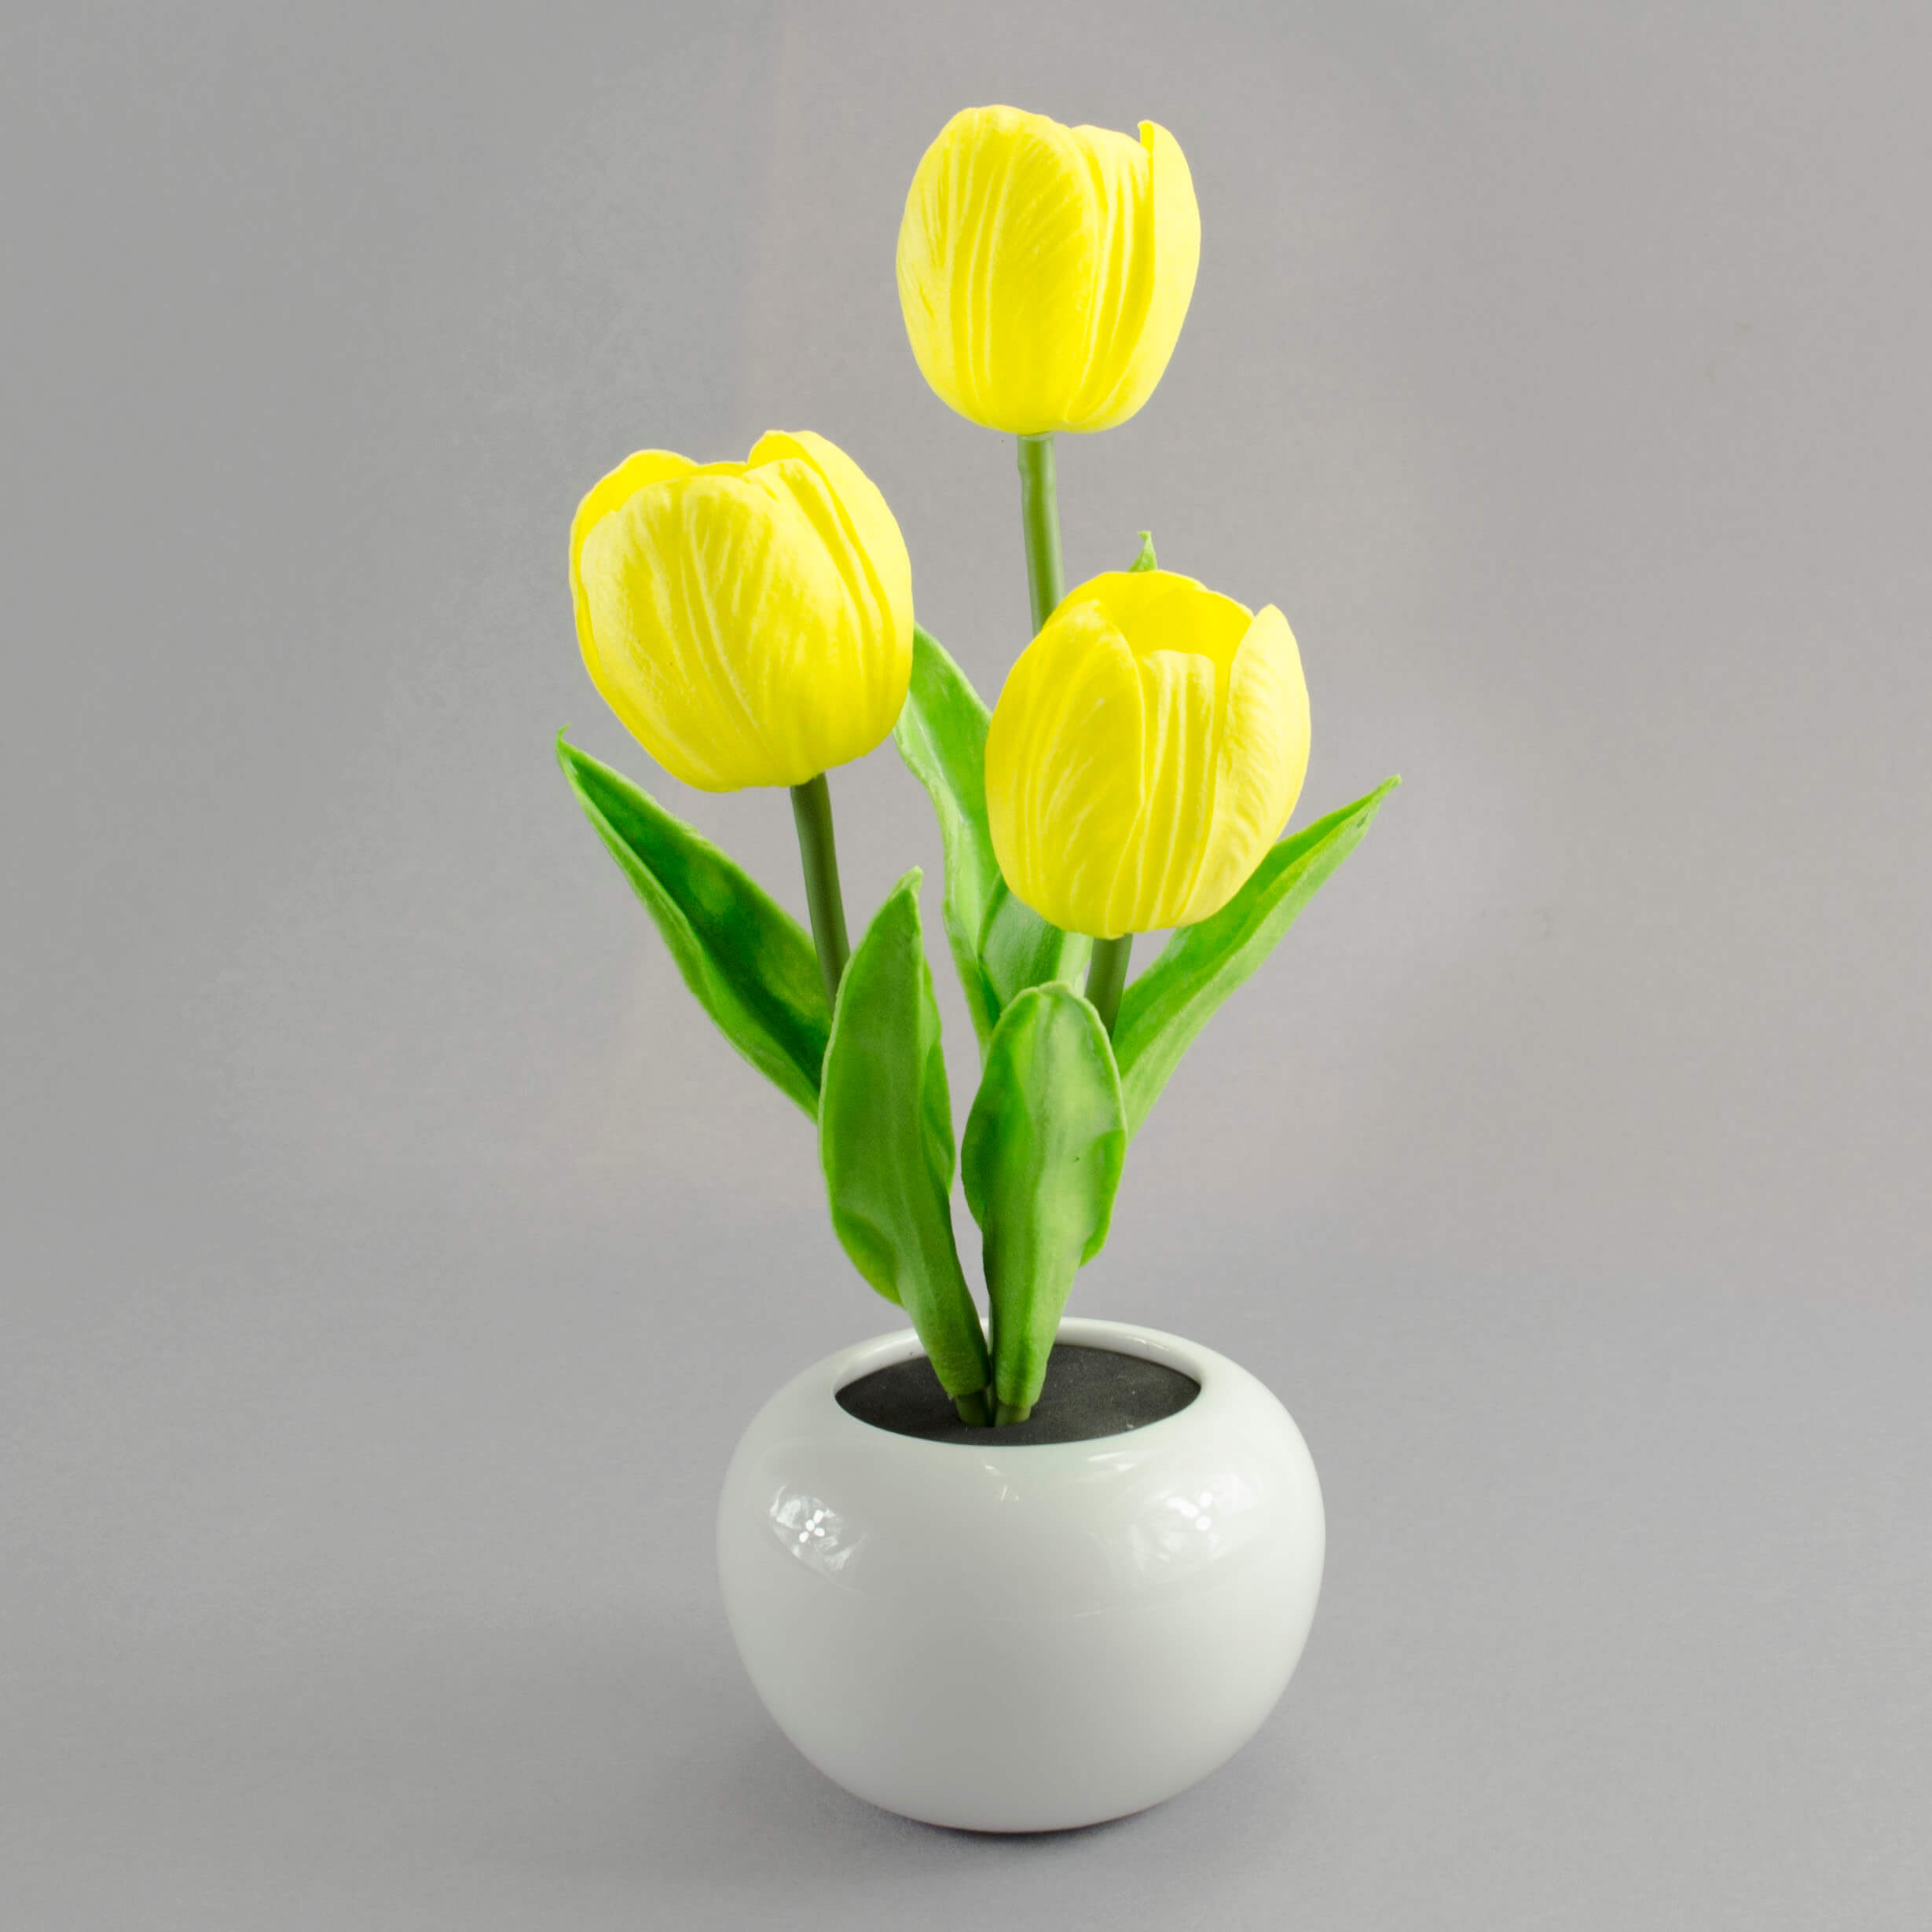 X4-LIFE LED Tulpen im Blumentopf, Deko Blumen inklusive Batterie - gelb